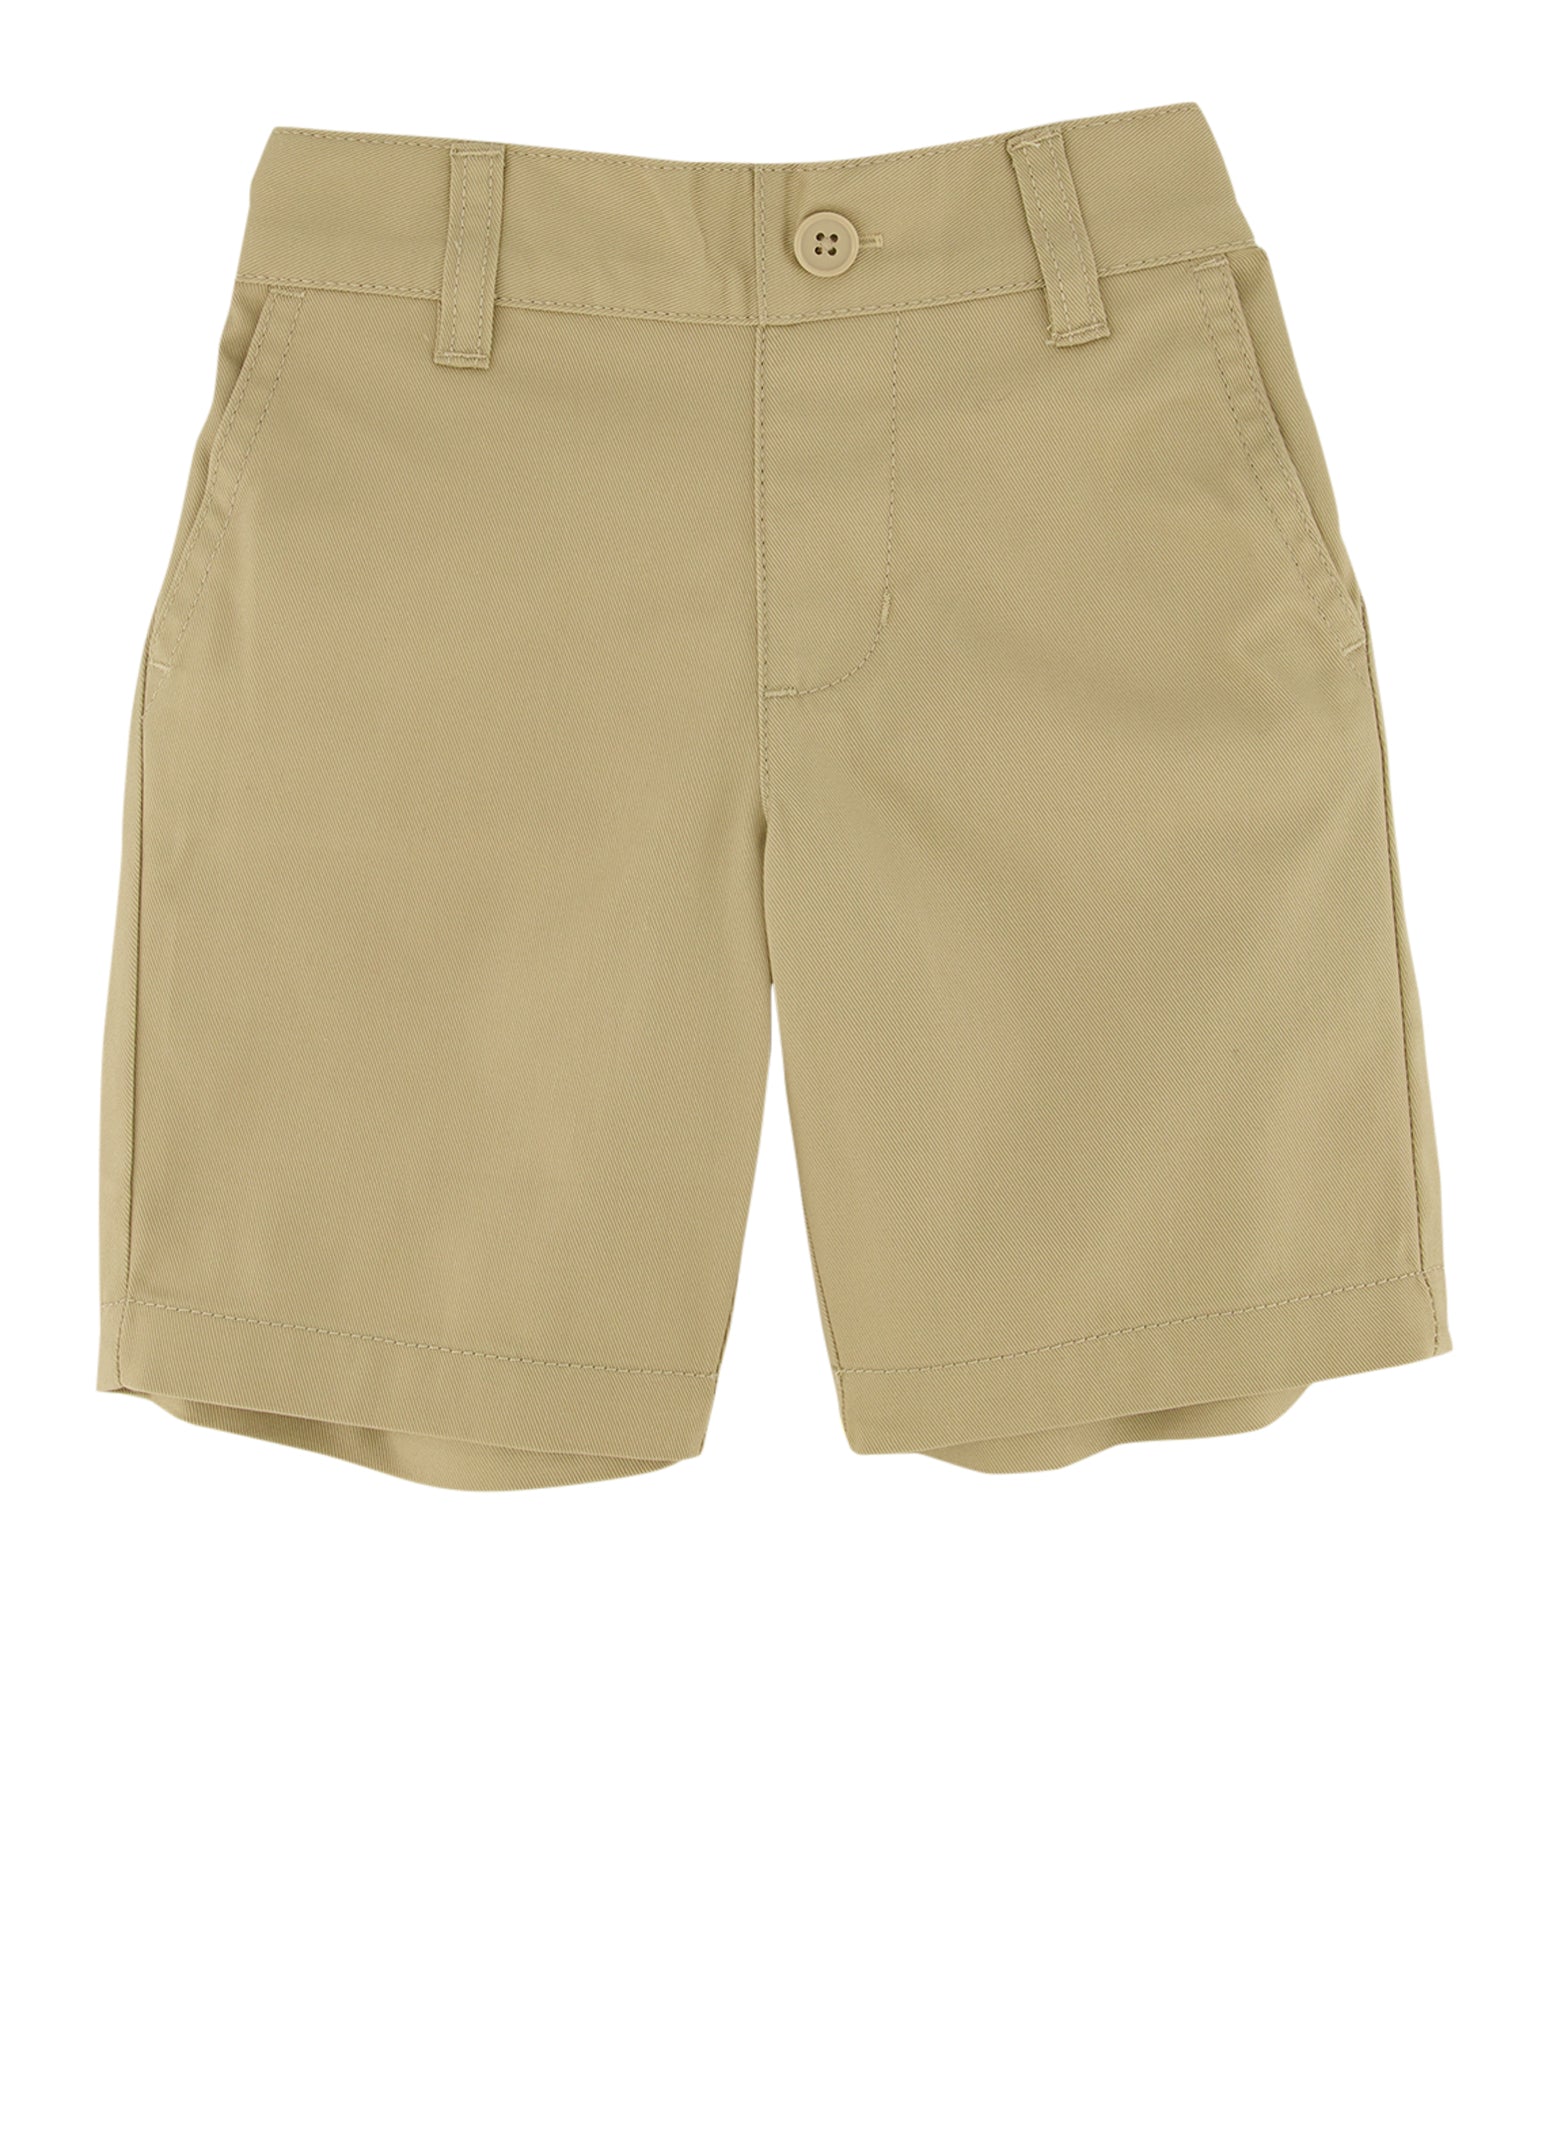 Boys 2T-4T Twill Shorts, Khaki,